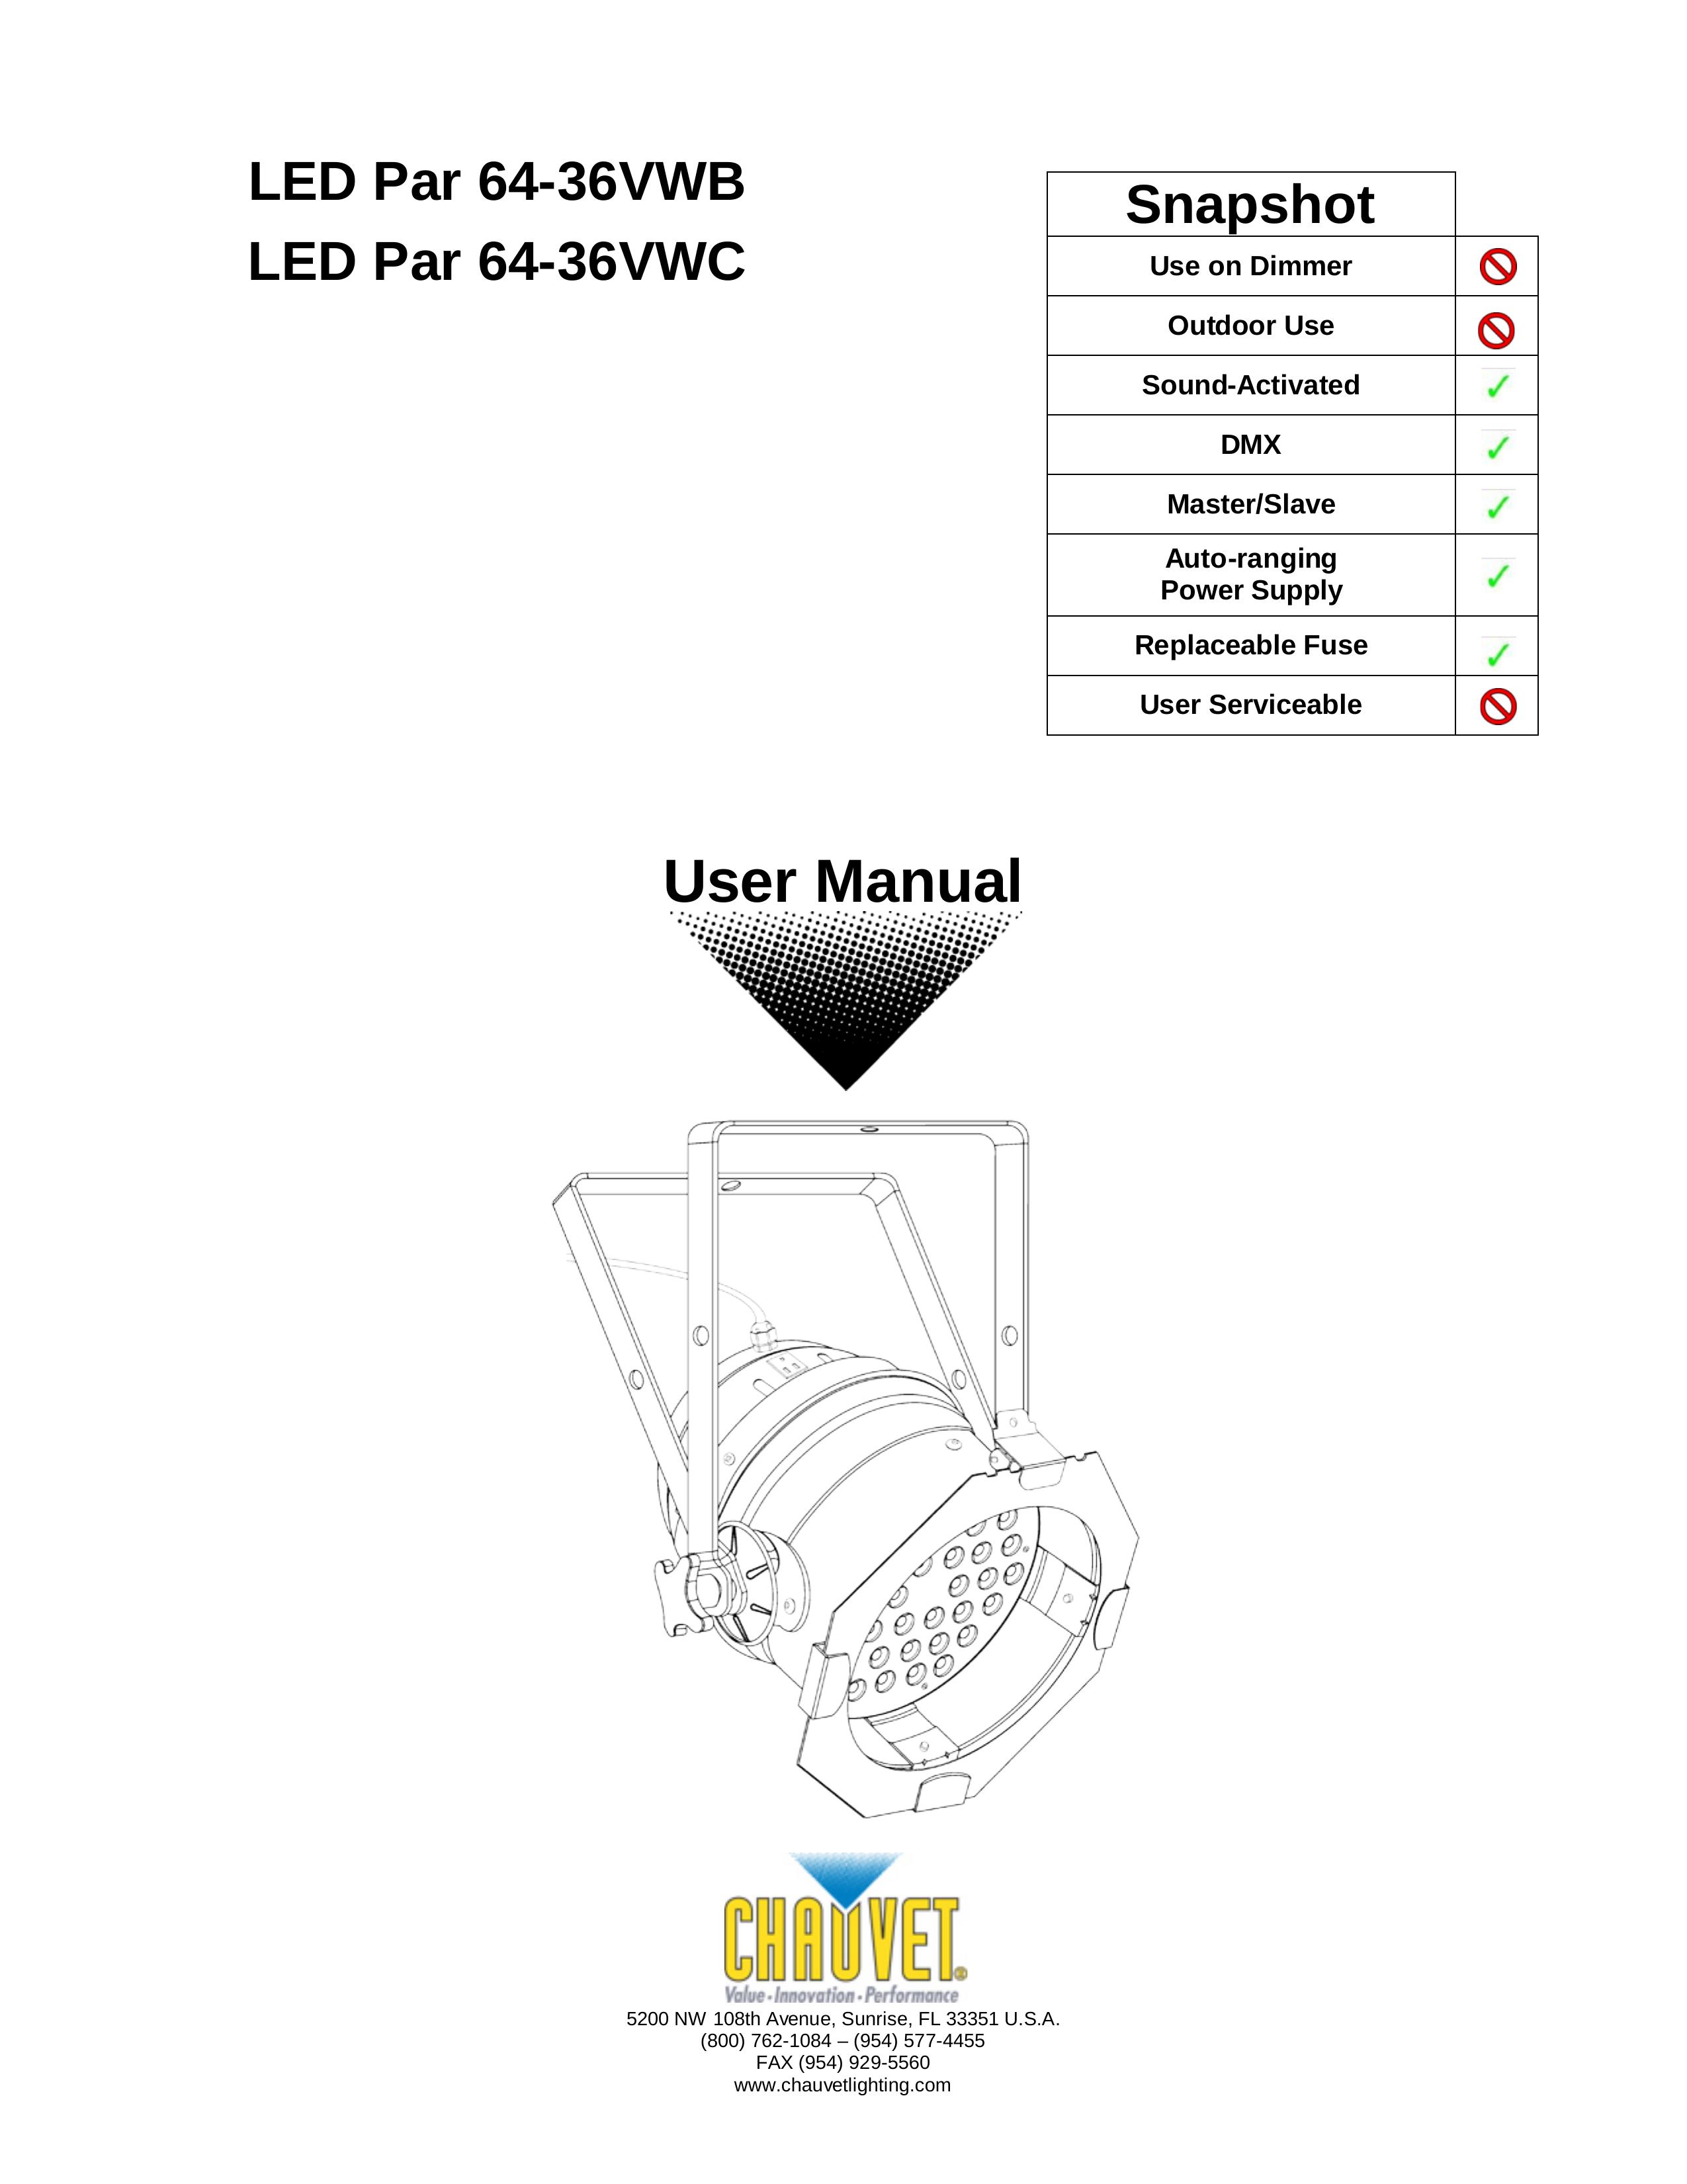 Chauvet 64-36VWB Landscape Lighting User Manual